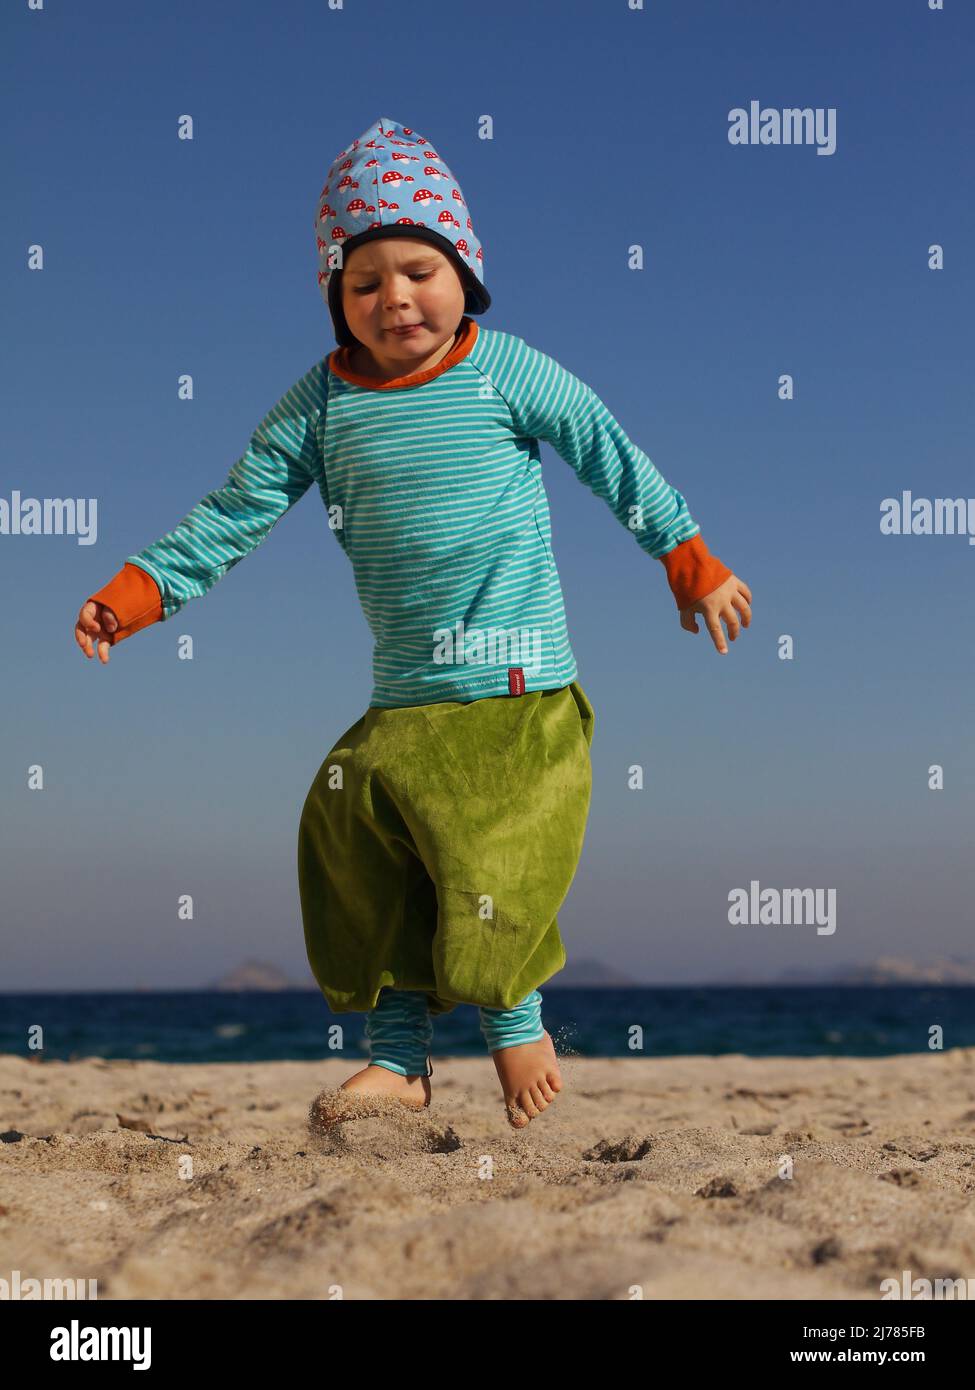 Junge springt im Sand Stock Photo